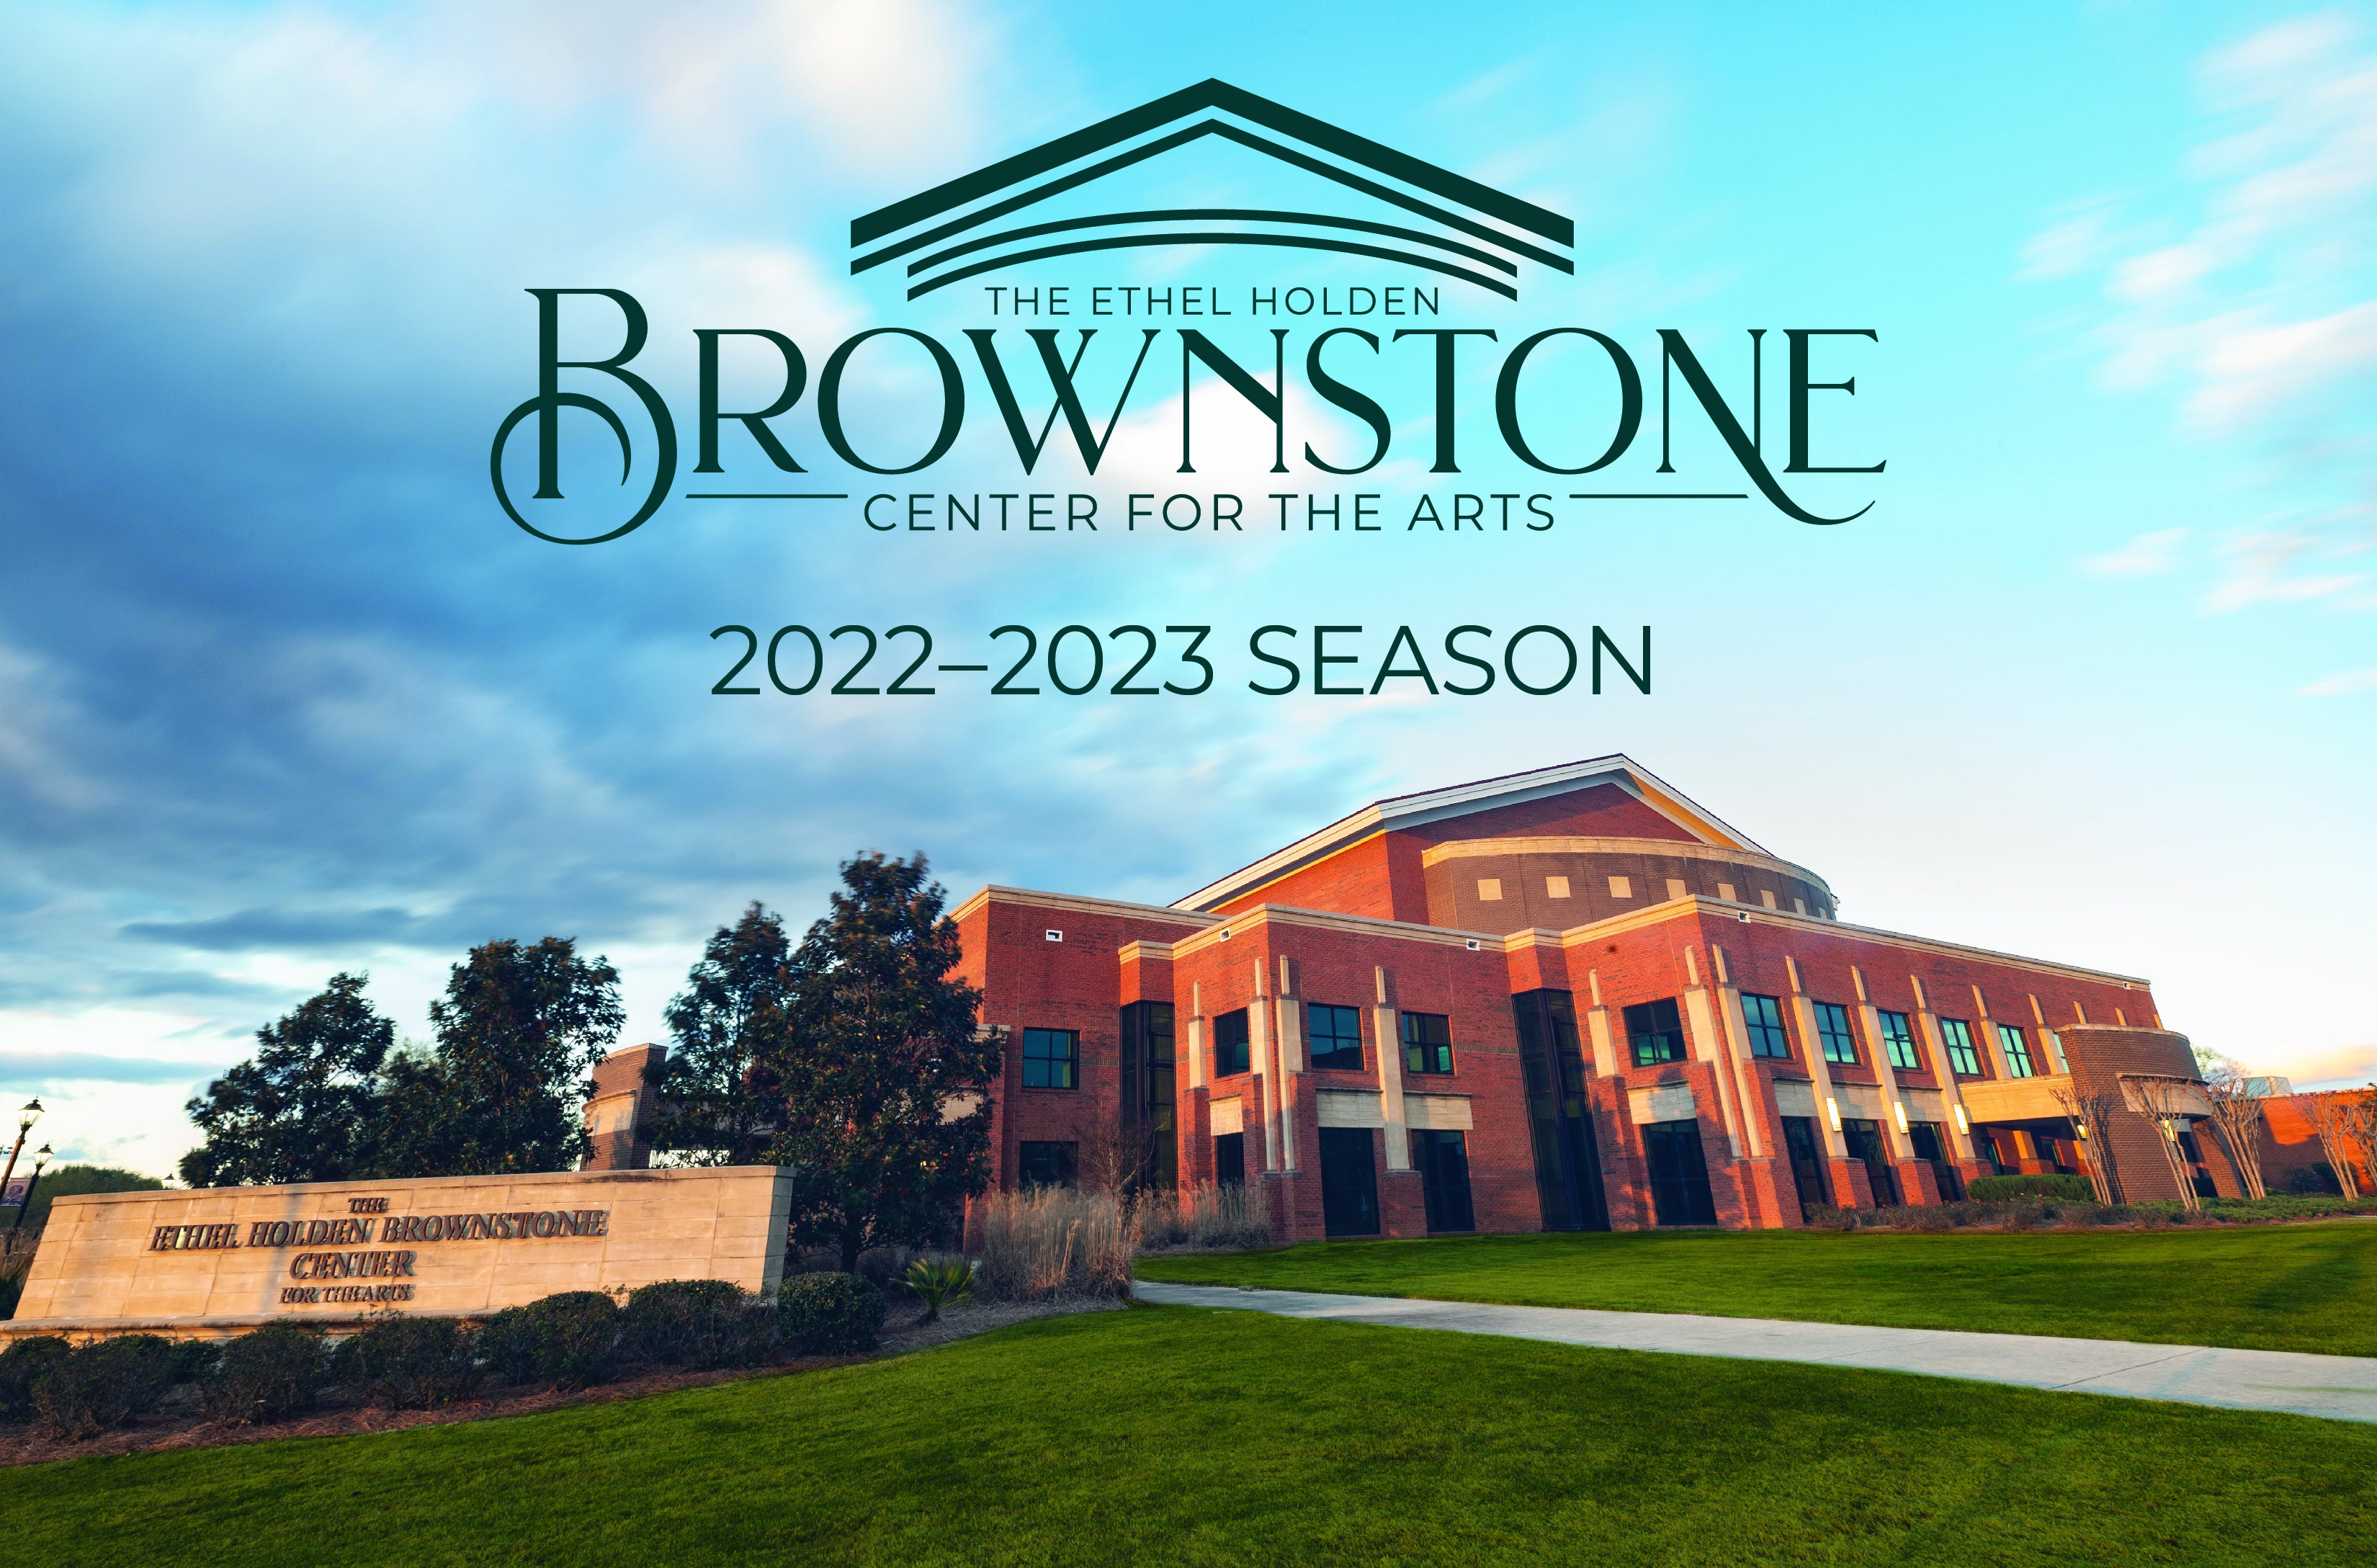 2022 2023 Season for PRCC’s Brownstone Center for the Arts announced